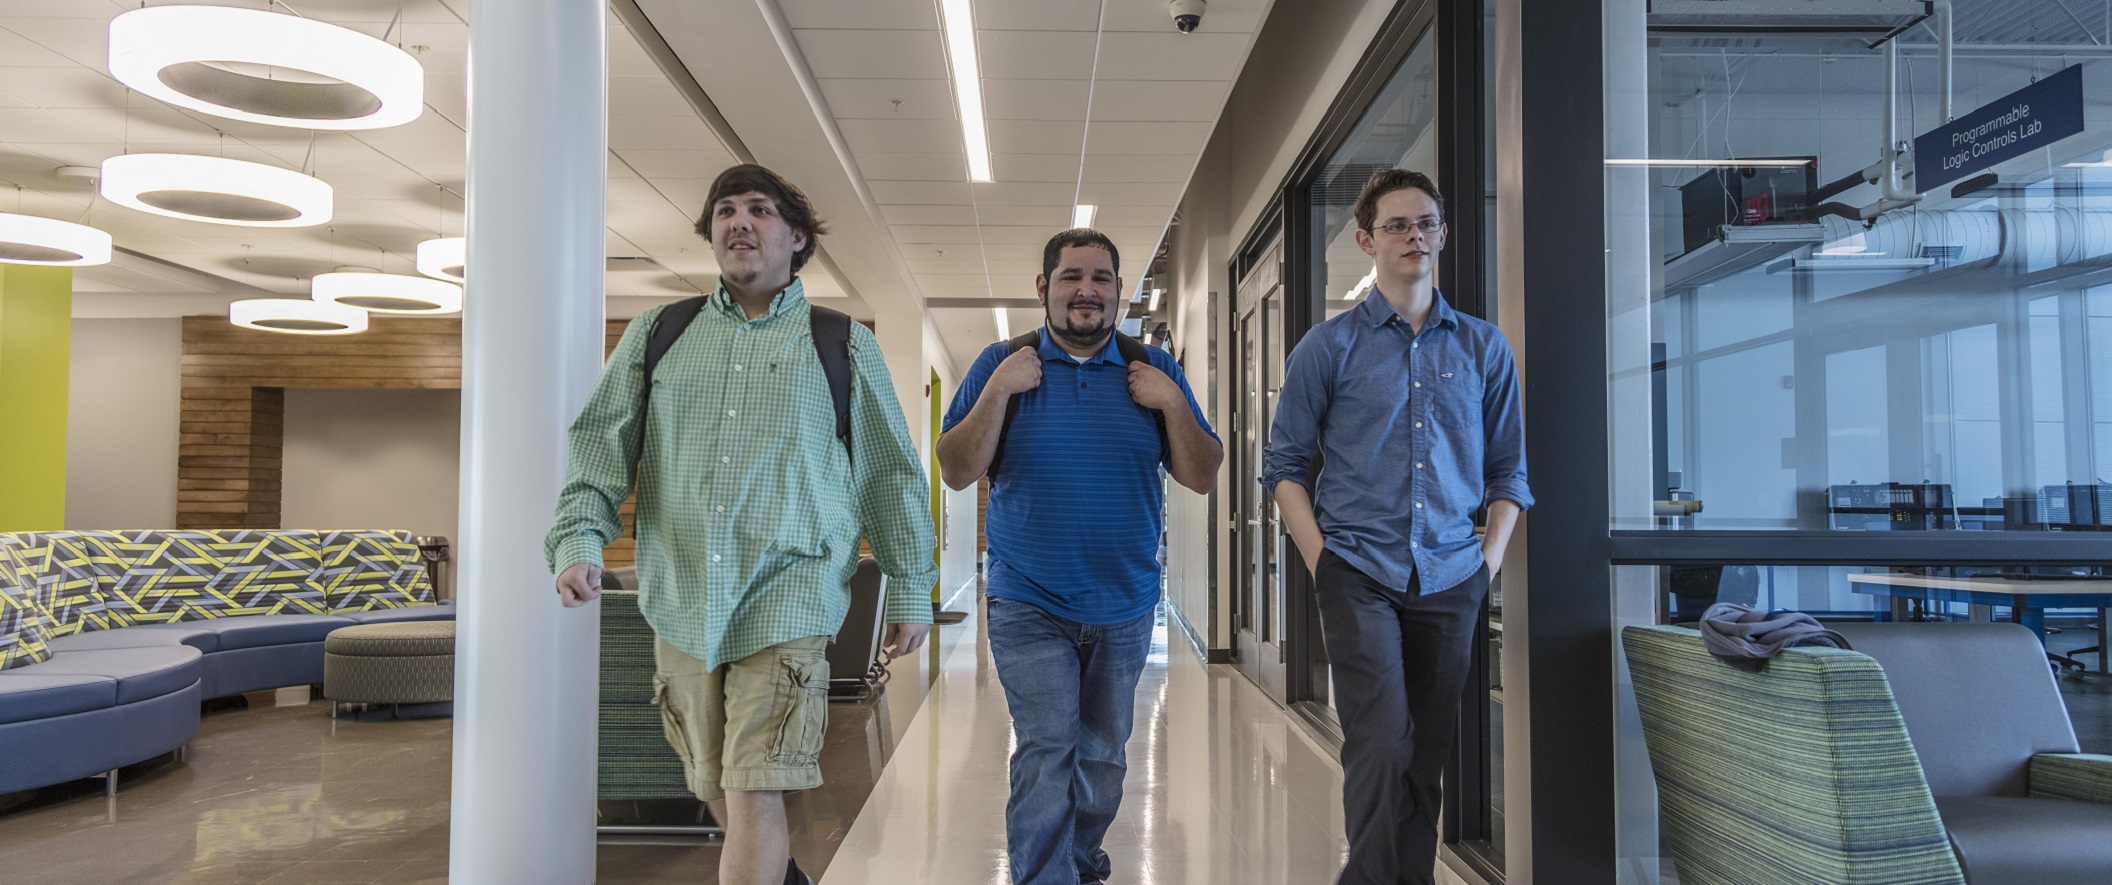 three male students walking down a hallway